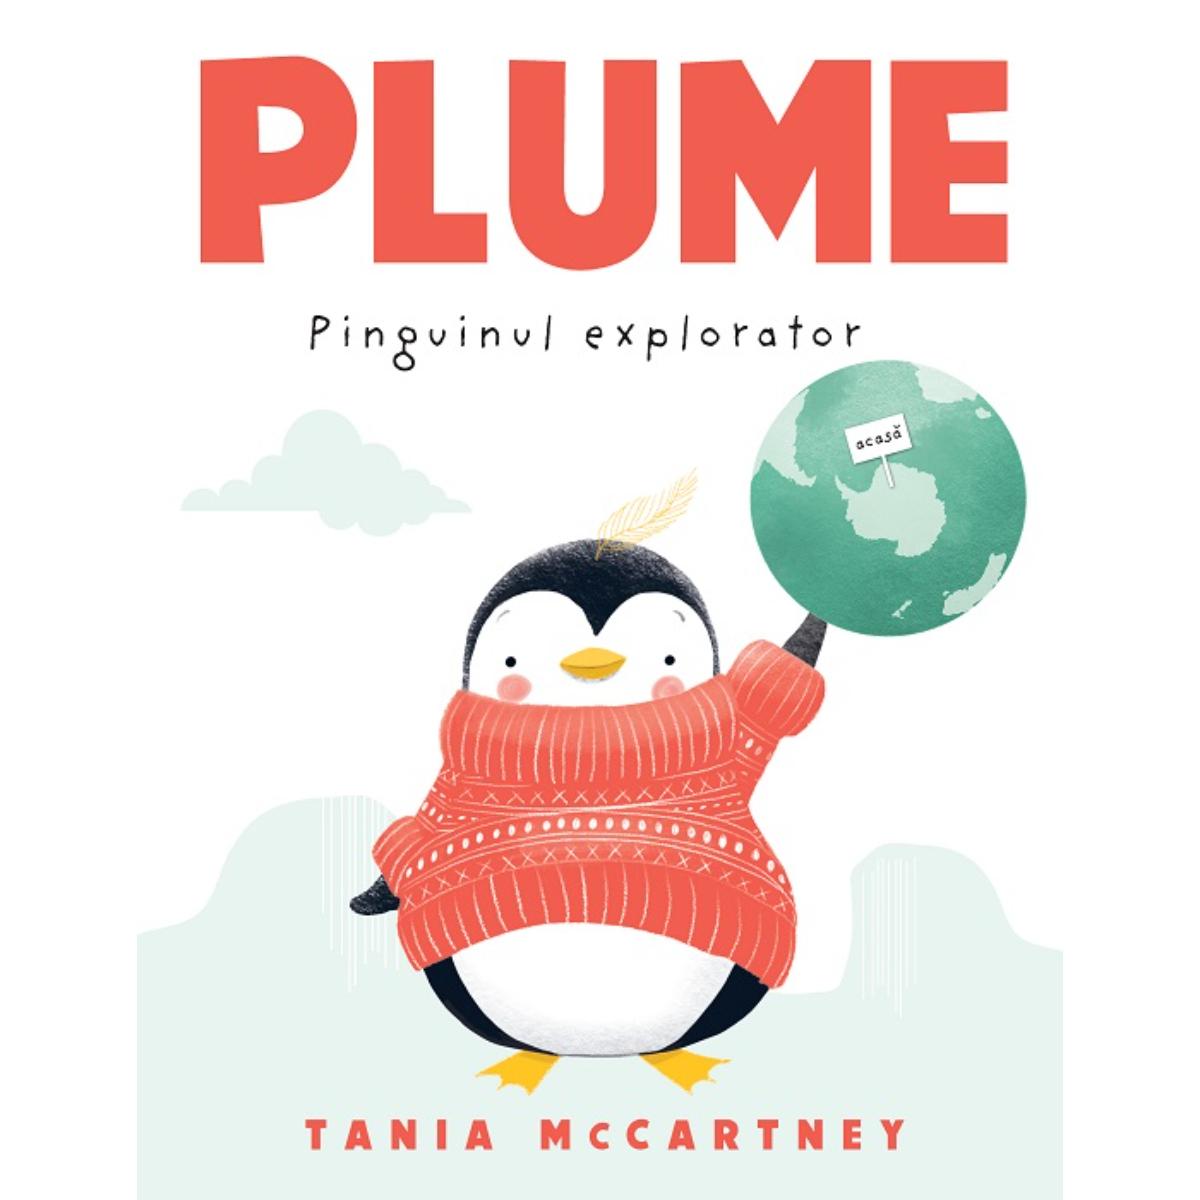 Plume, pinguinul explorator, Tania Mccartney